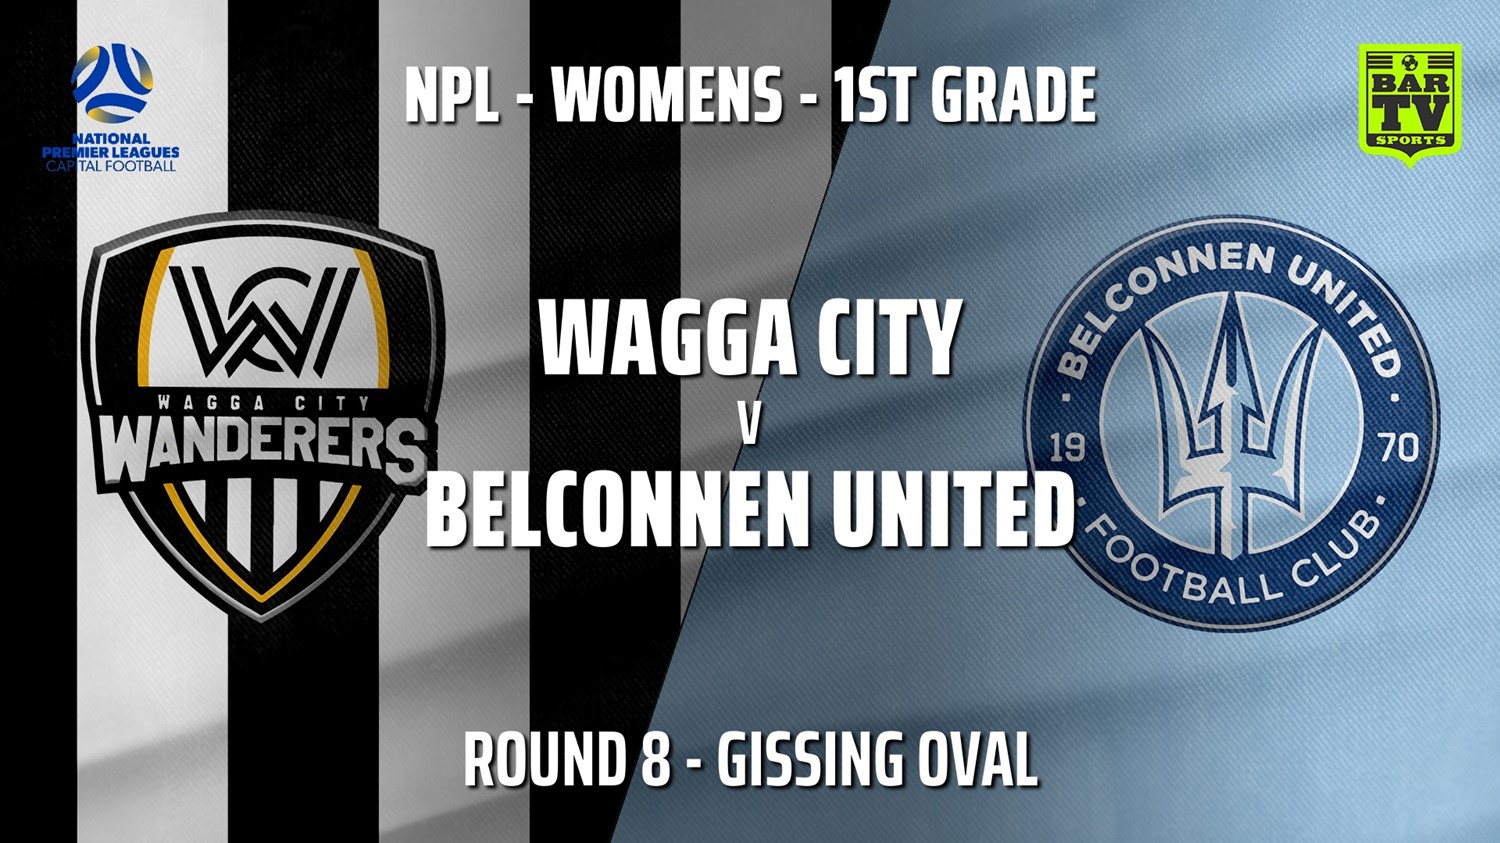 210530-NPLW - Capital Round 8 - Wagga City Wanderers FC (women) v Belconnen United (women) Minigame Slate Image